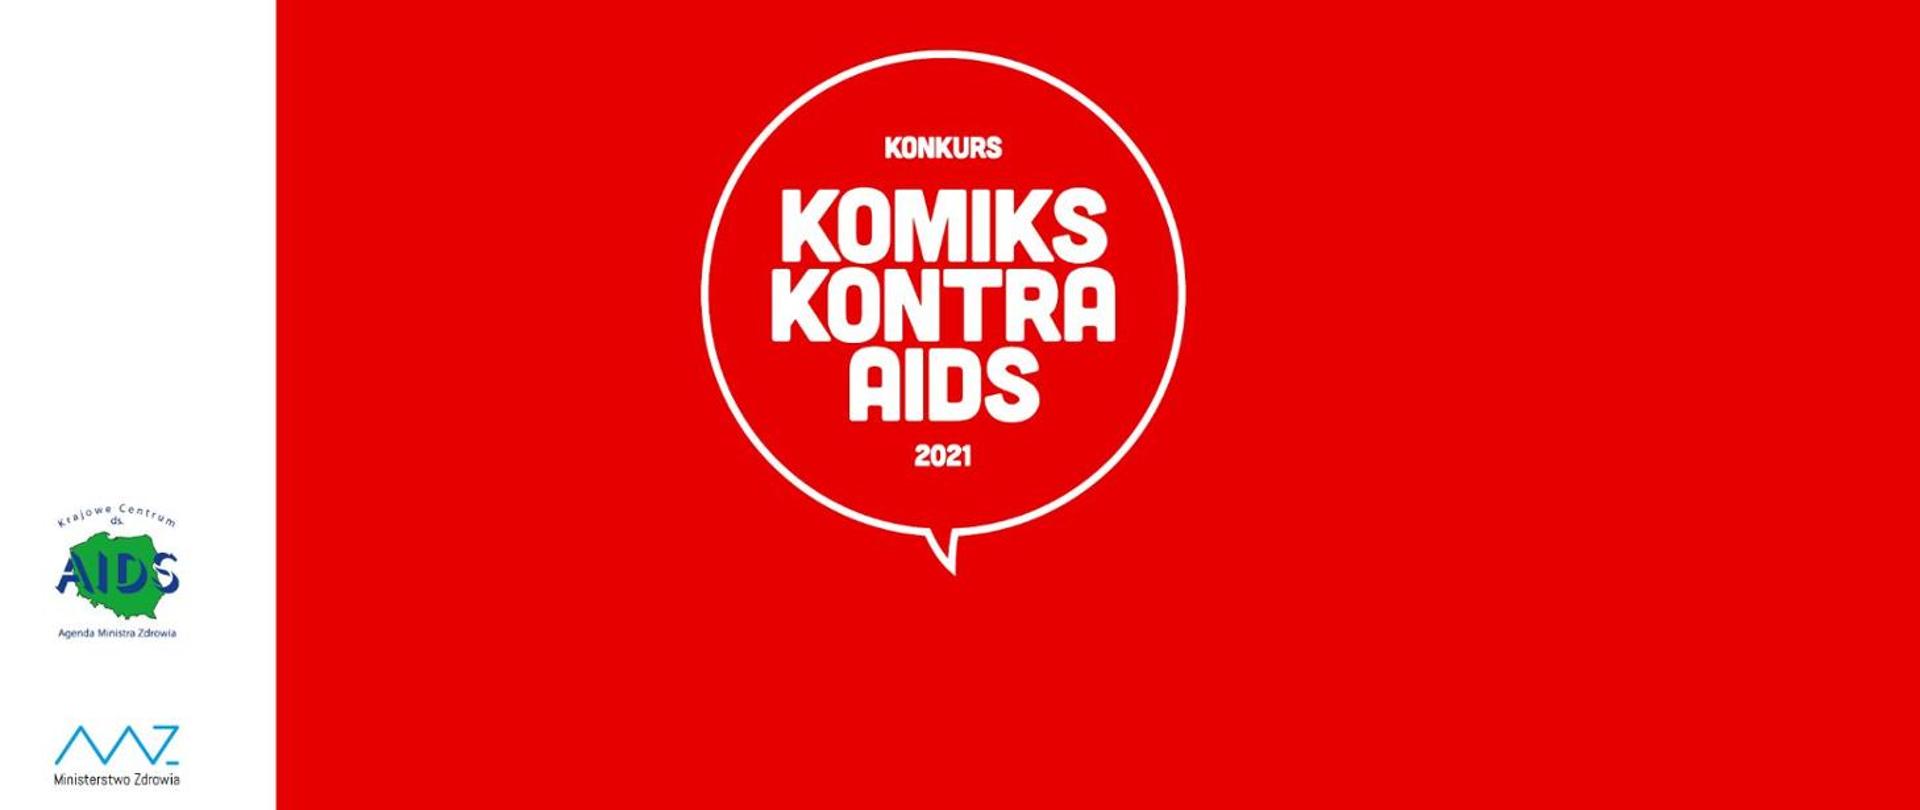 Konkurs "Komiks kontra AIDS" 